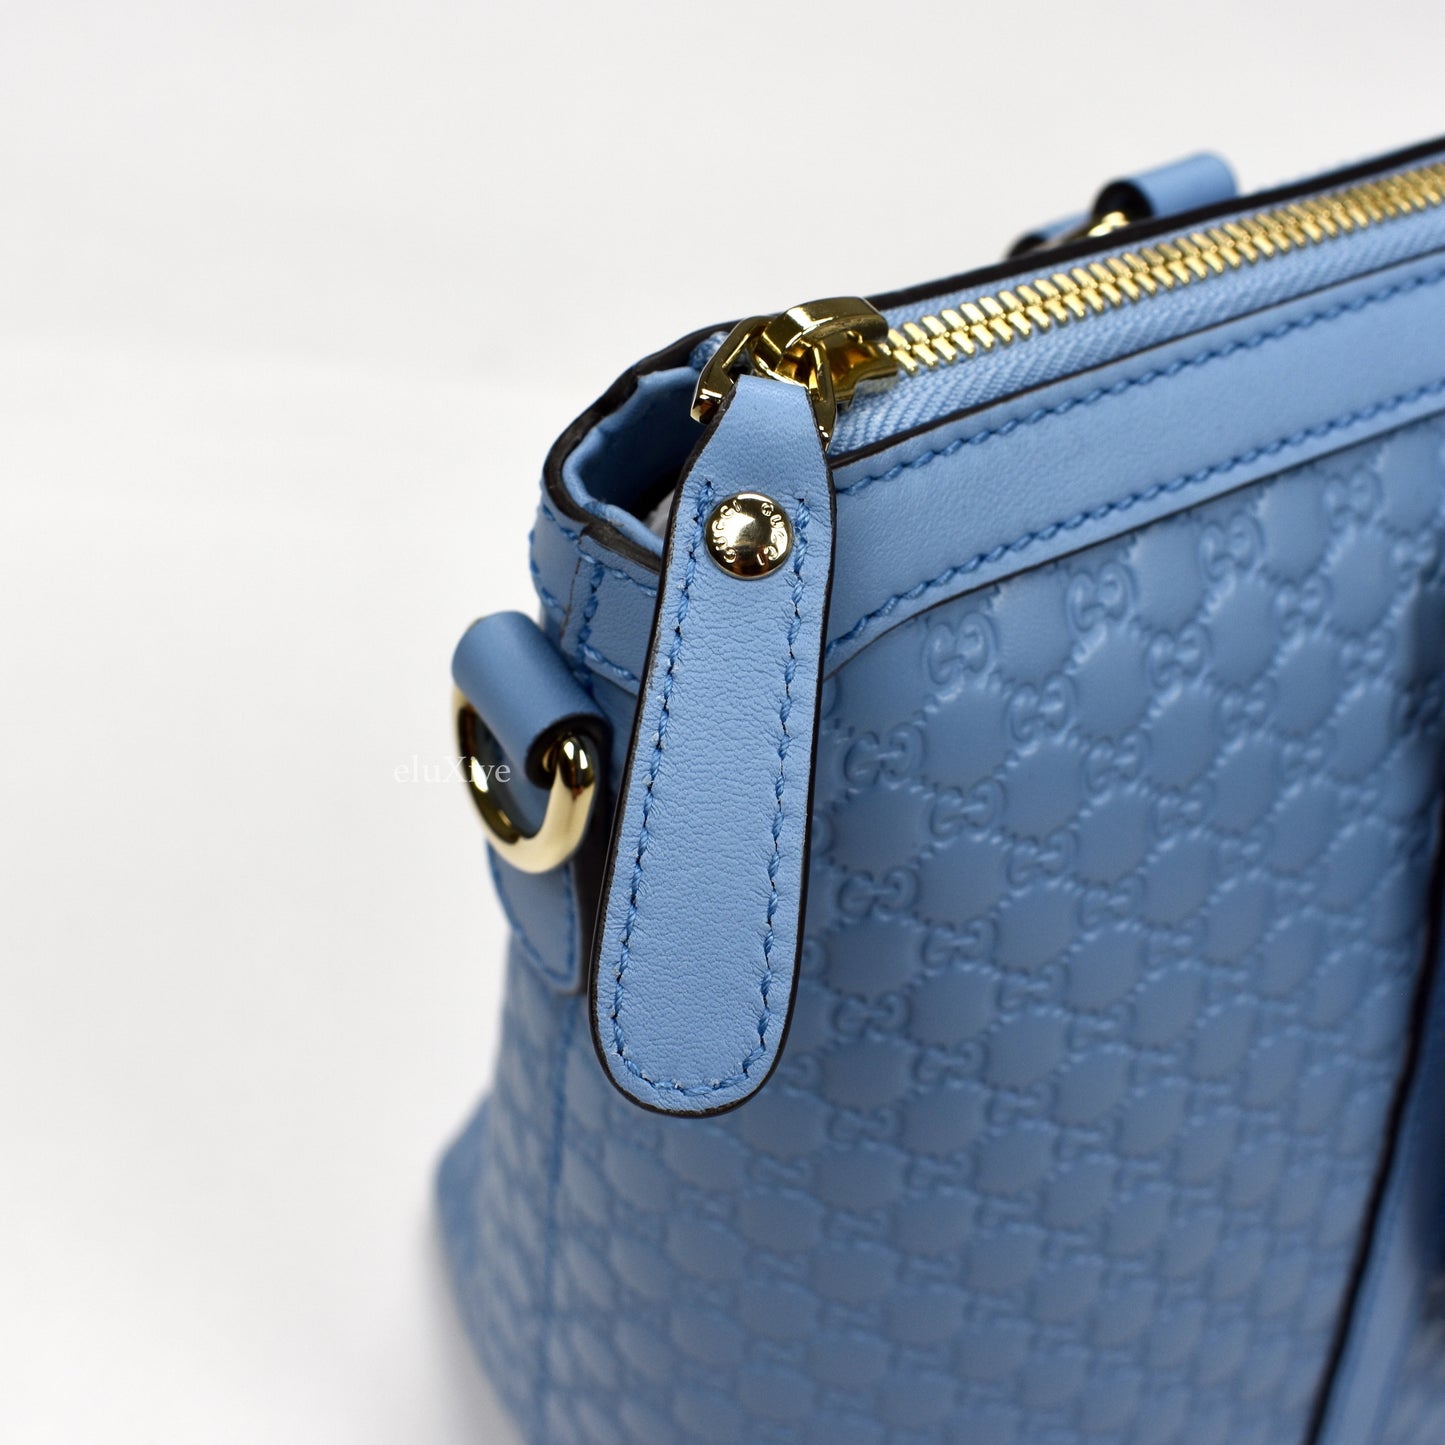 Gucci - Light Blue Guccissima Logo Satchel Bag